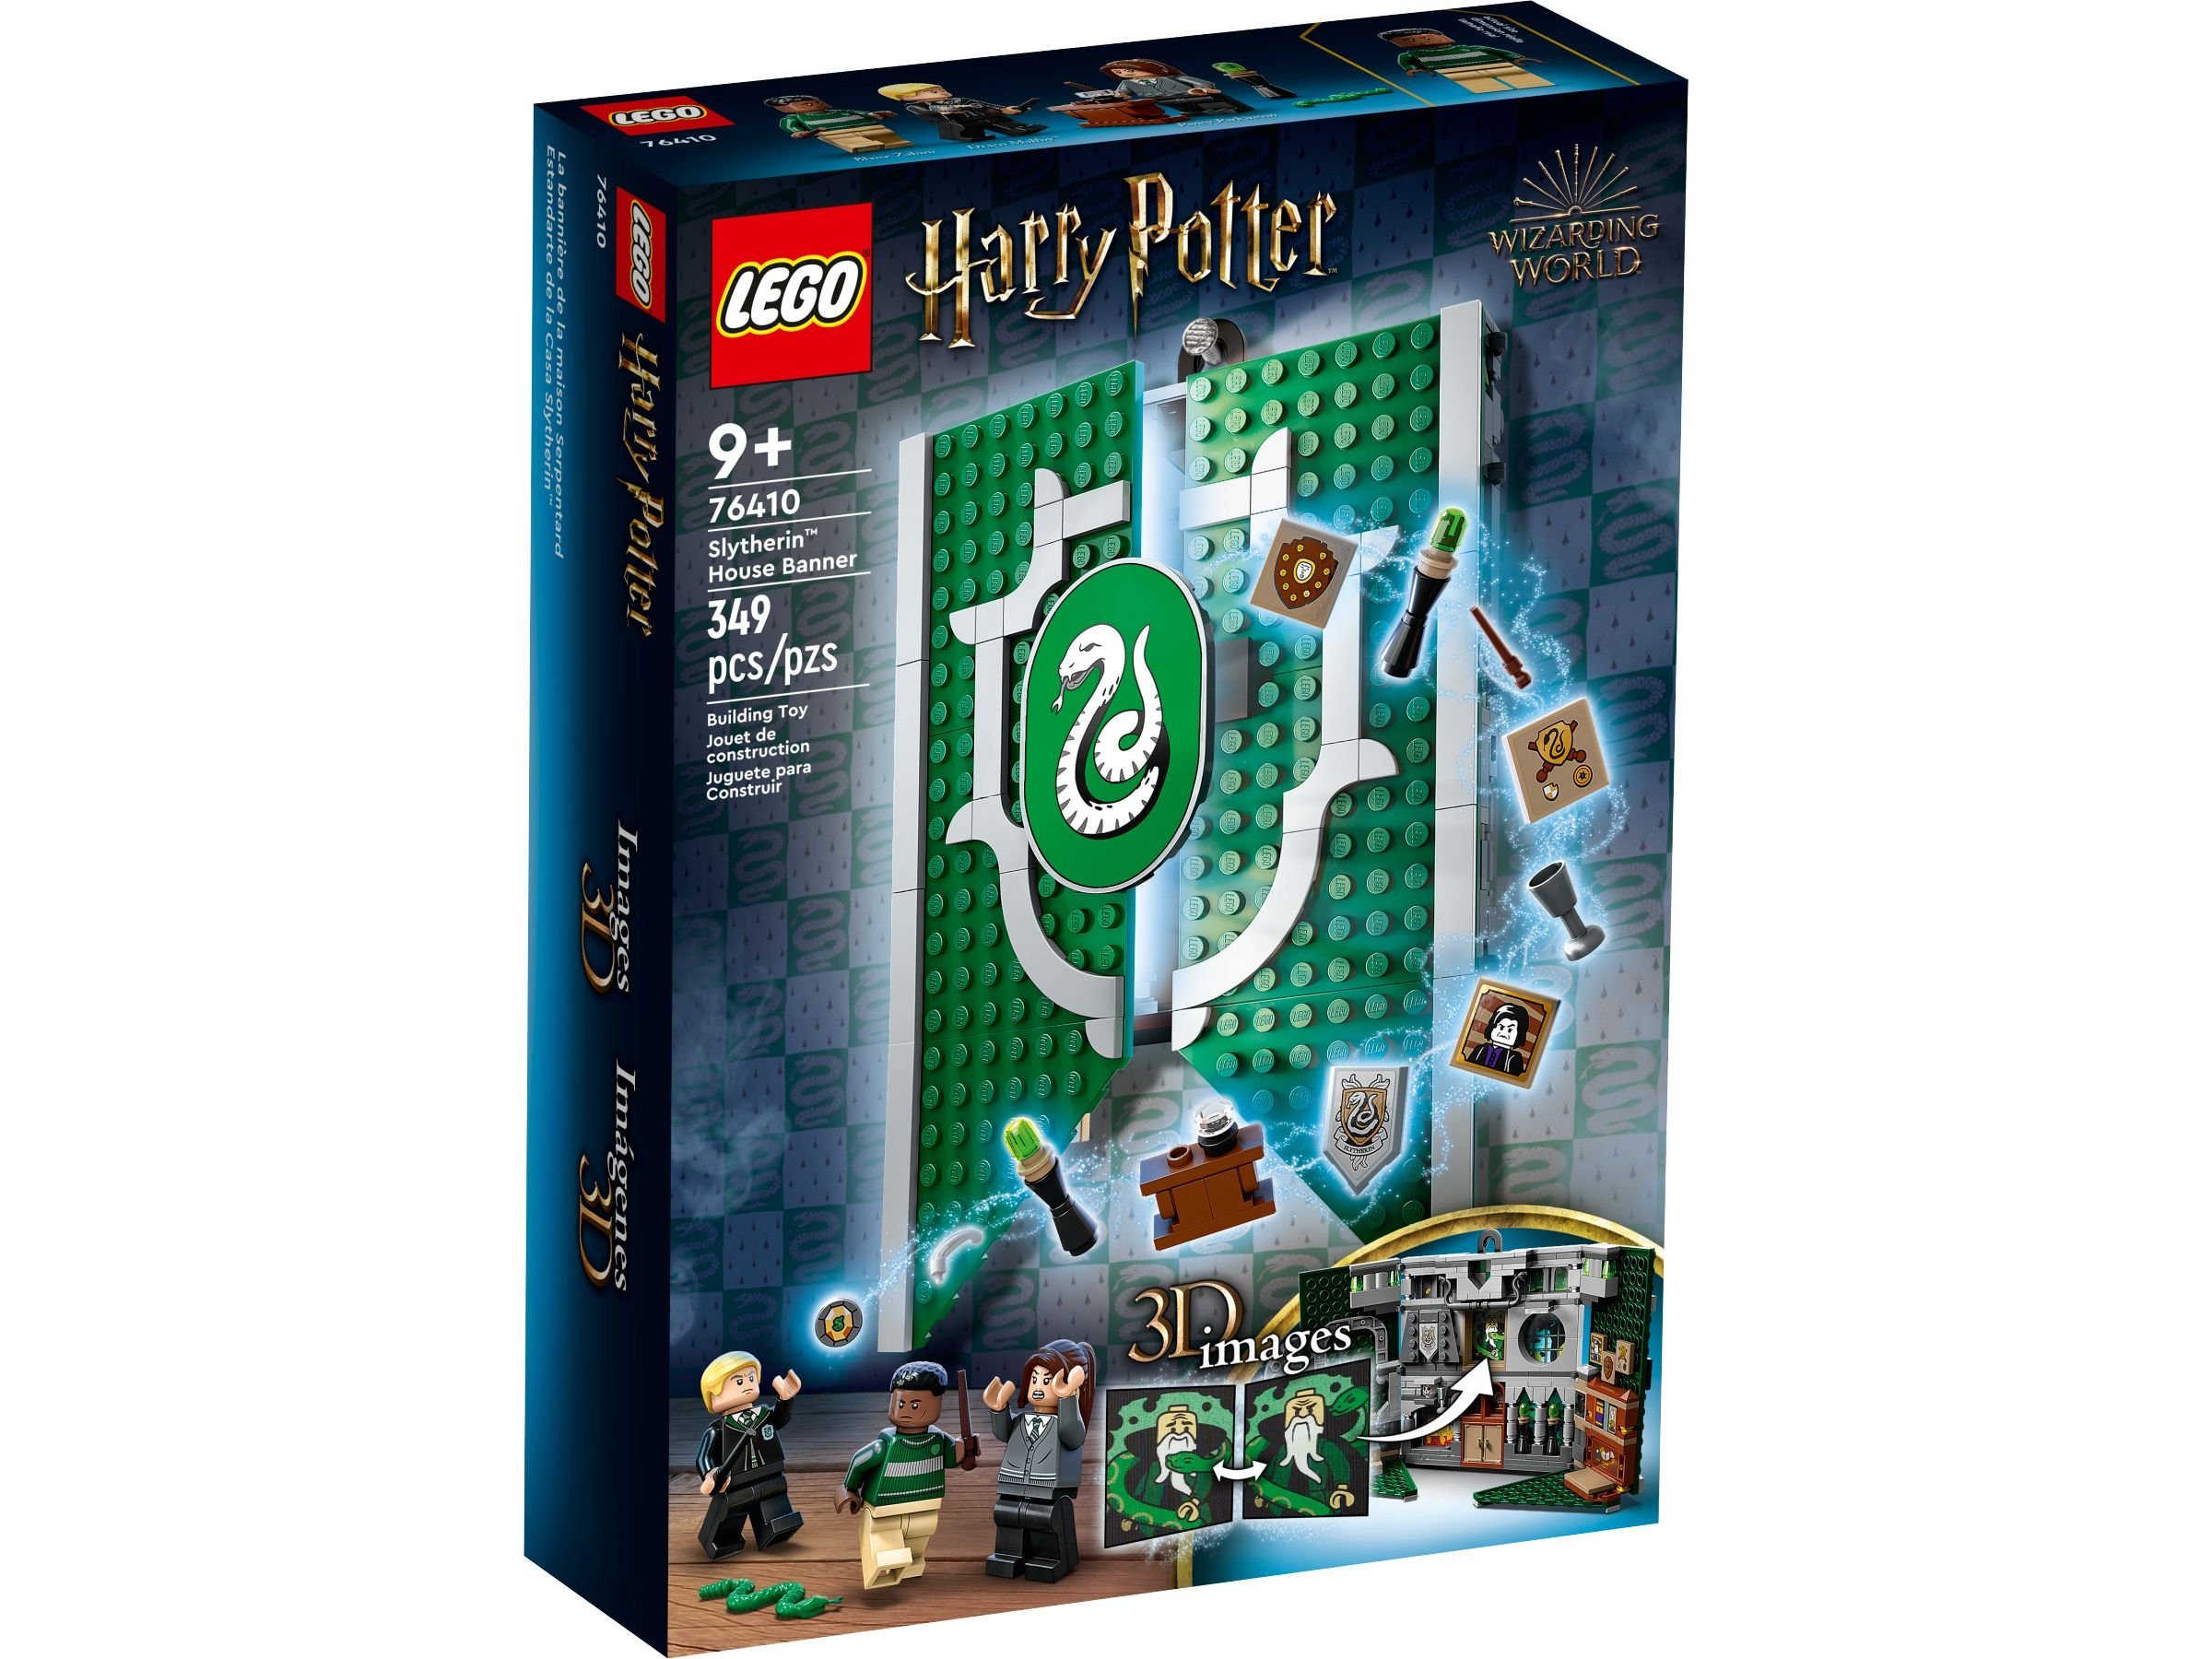 LEGO Harry Potter 76410 Hausbanner Slytherin™ LEGO_76410_alt1.jpg